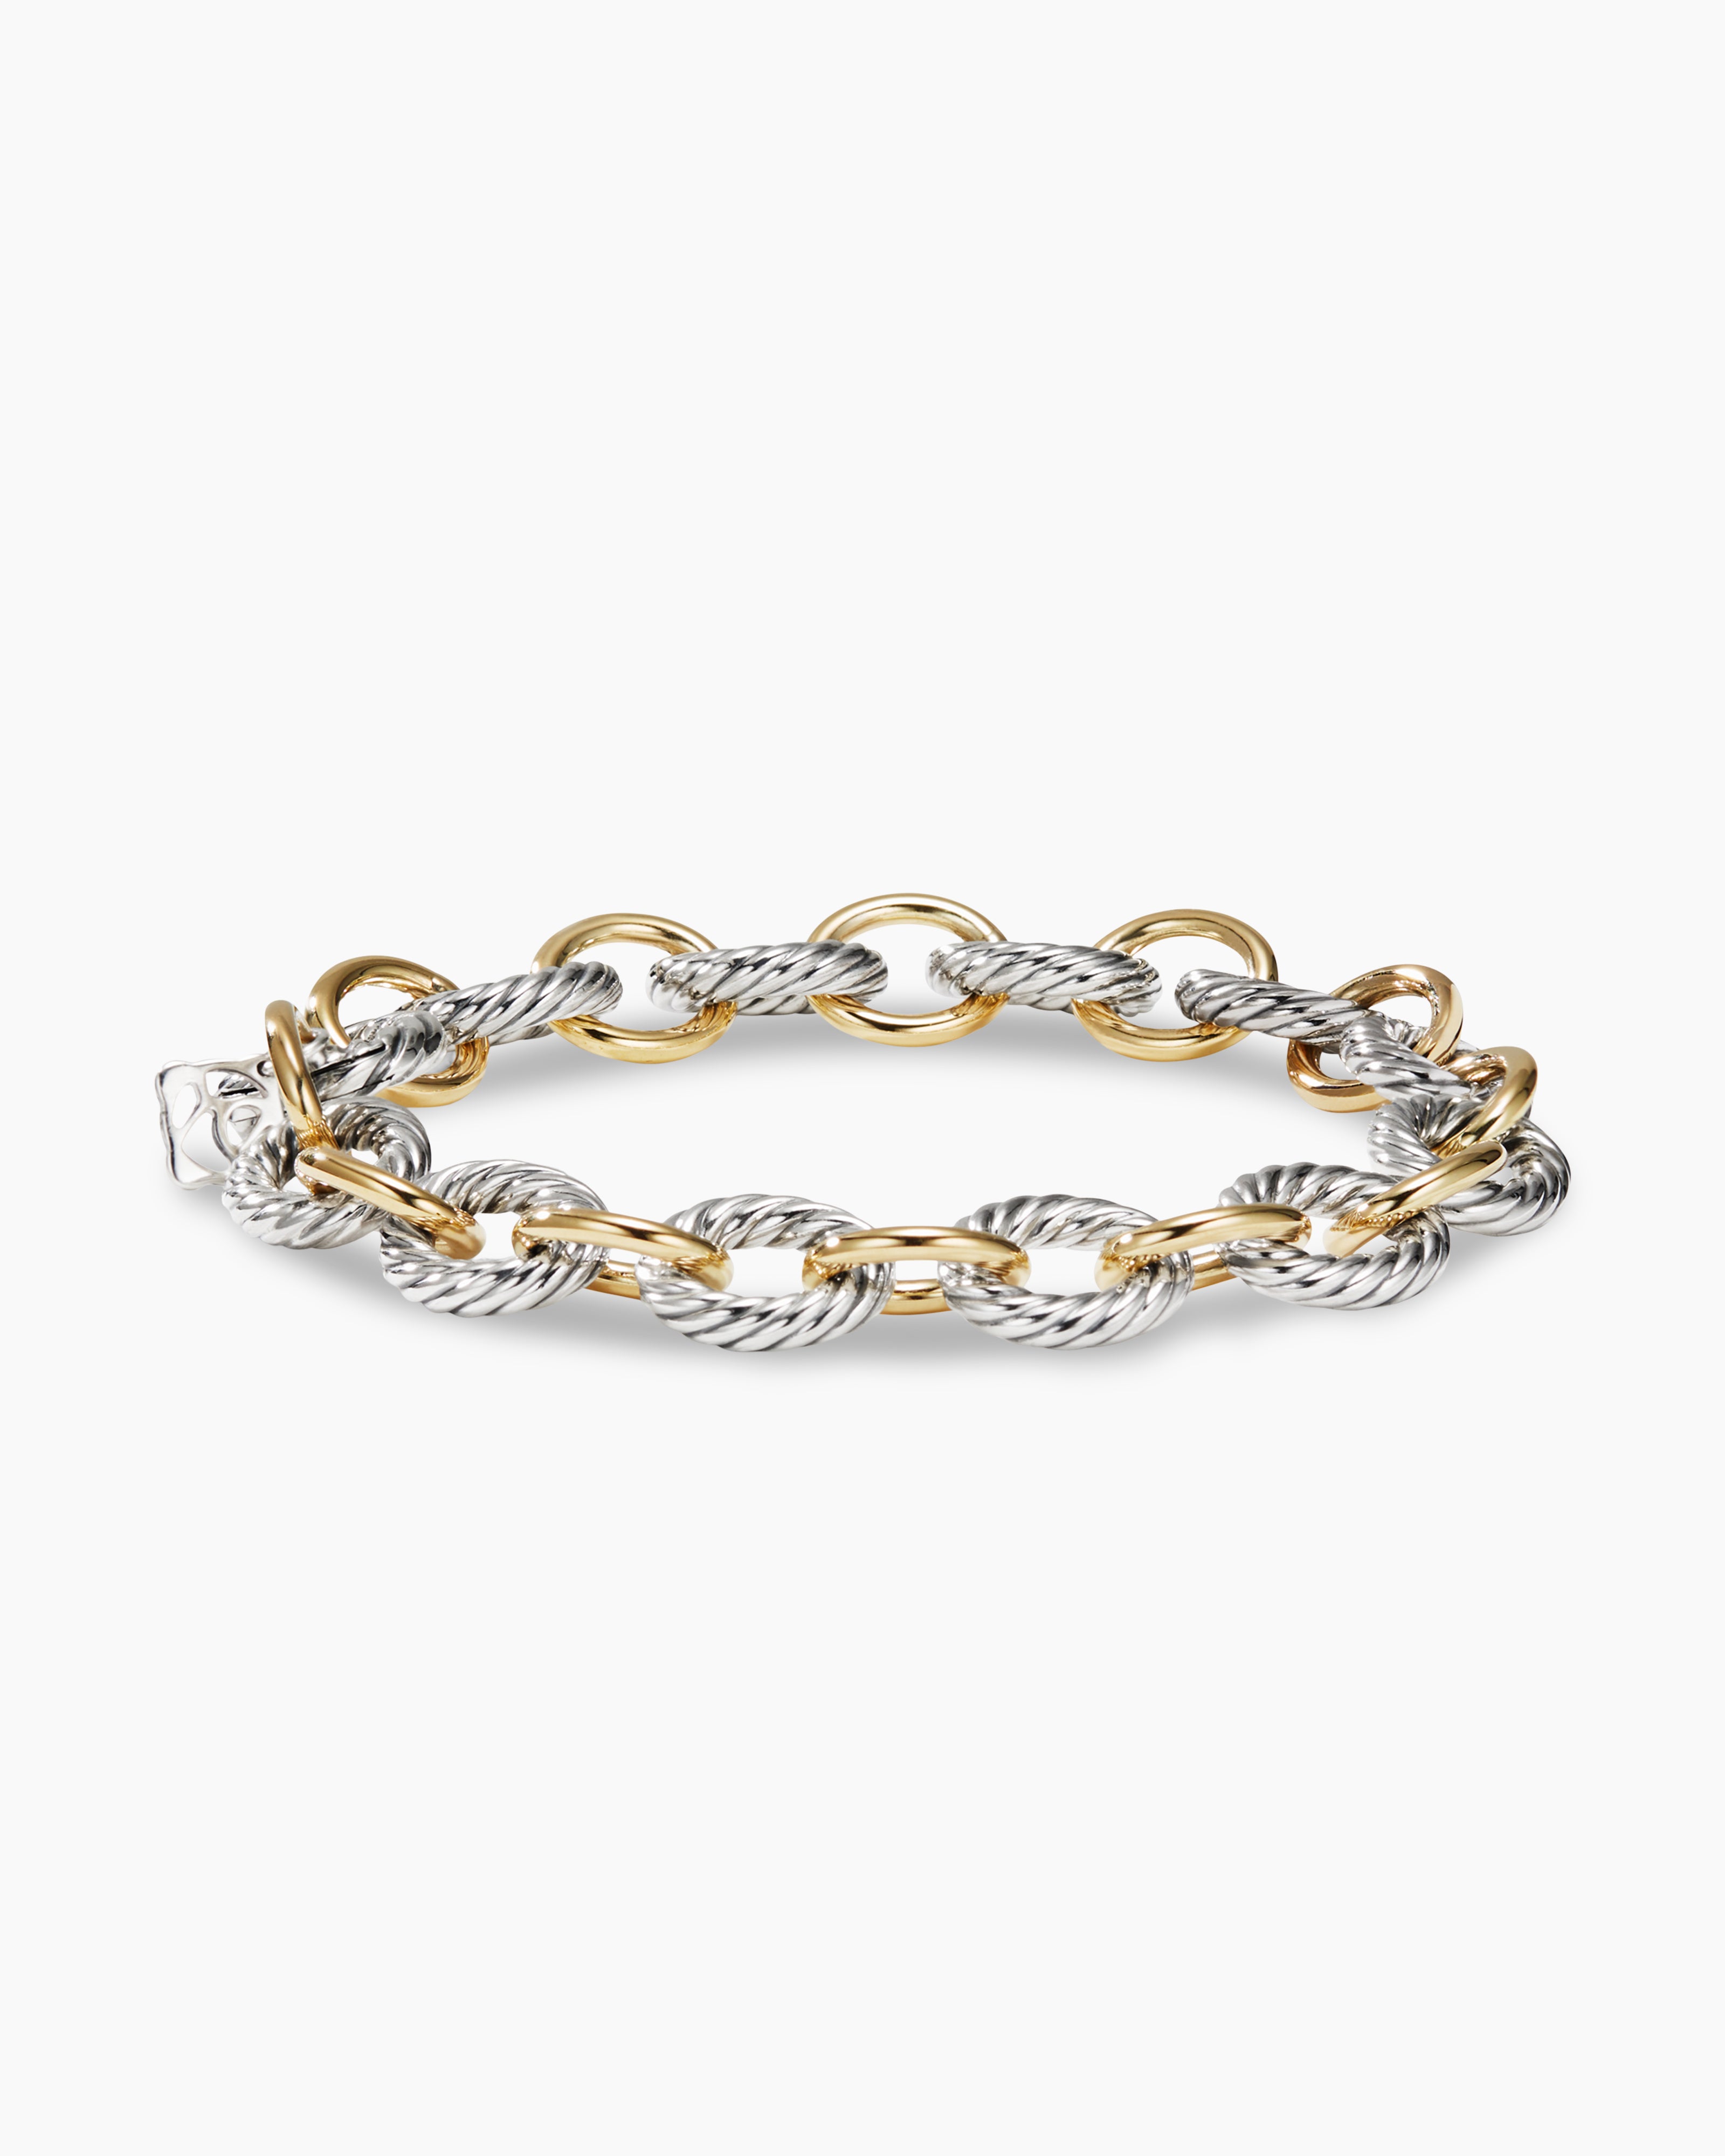 Large Link Sterling Silver Charm Bracelet Chain (10.5mm)